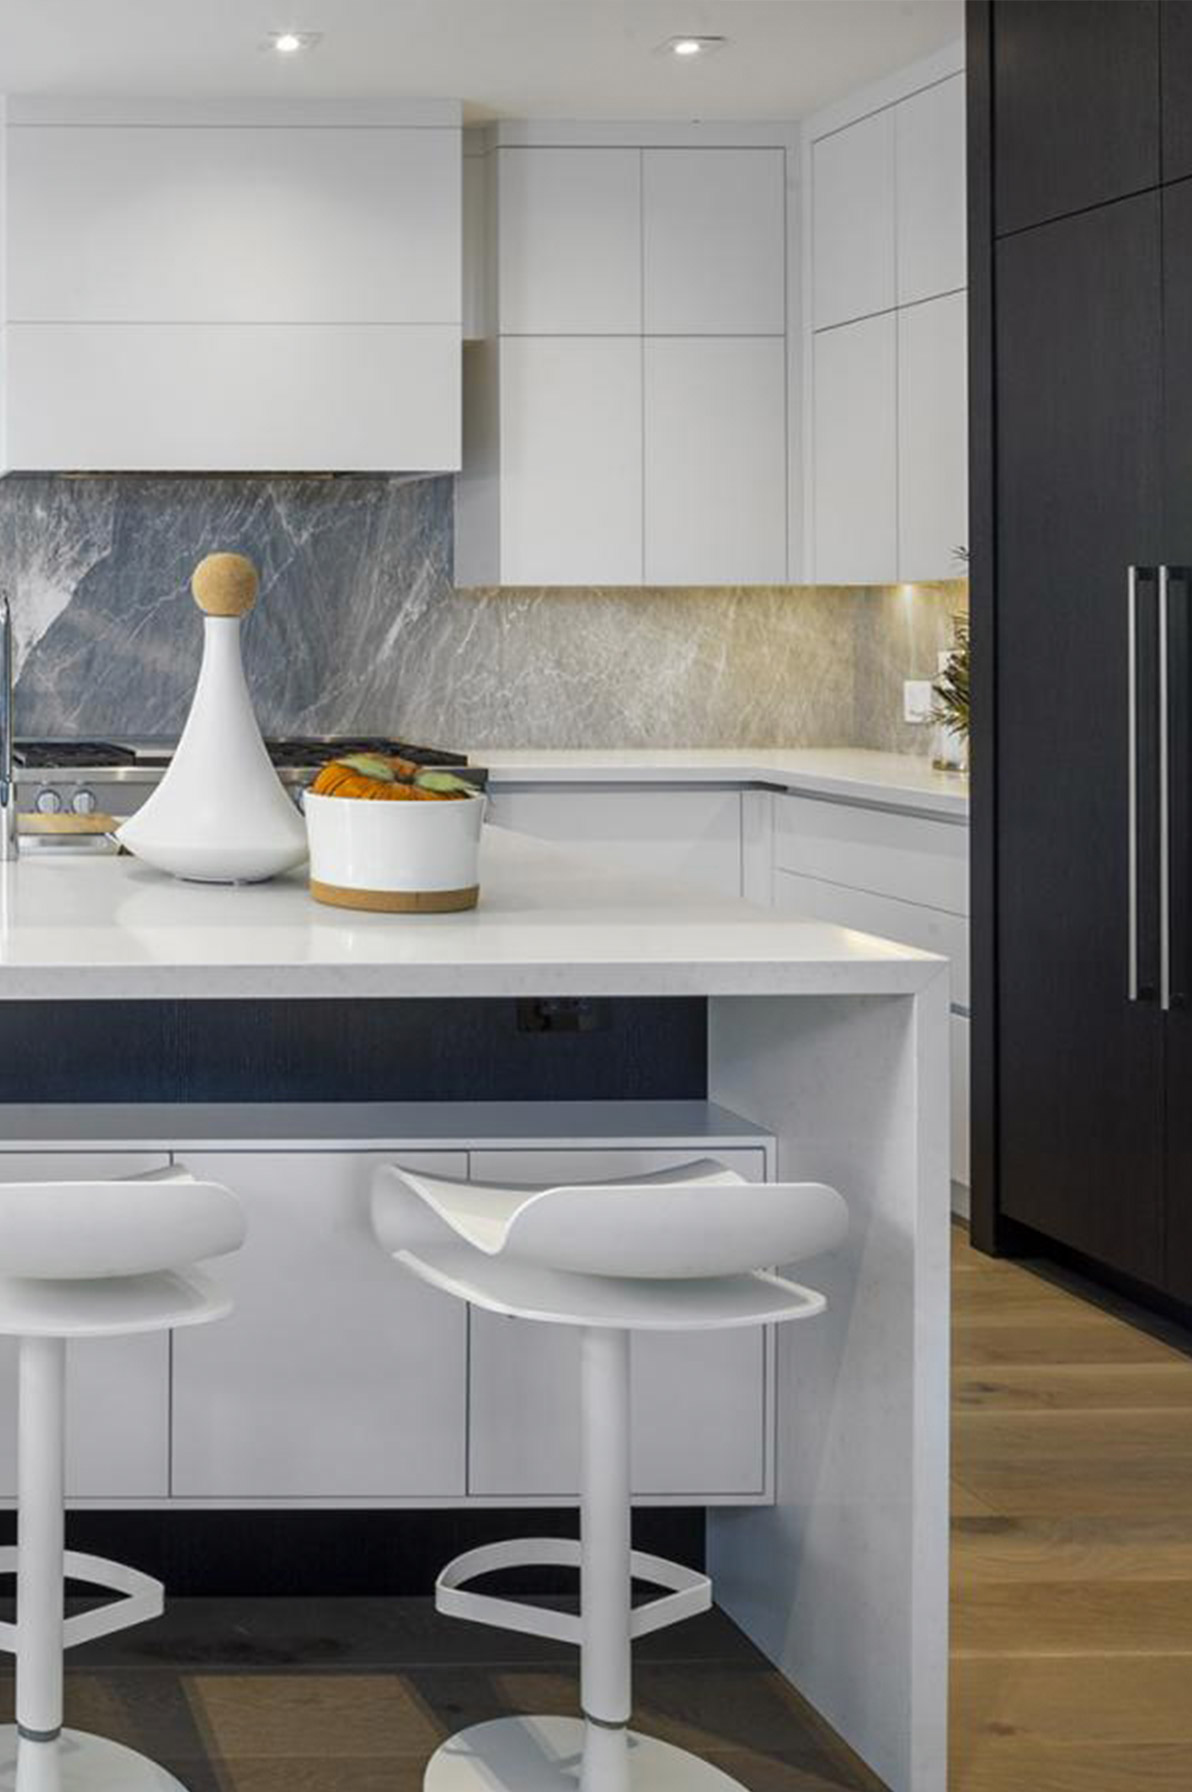 Modern kitchen with white cabinets, stone backsplash and breakfast bar.